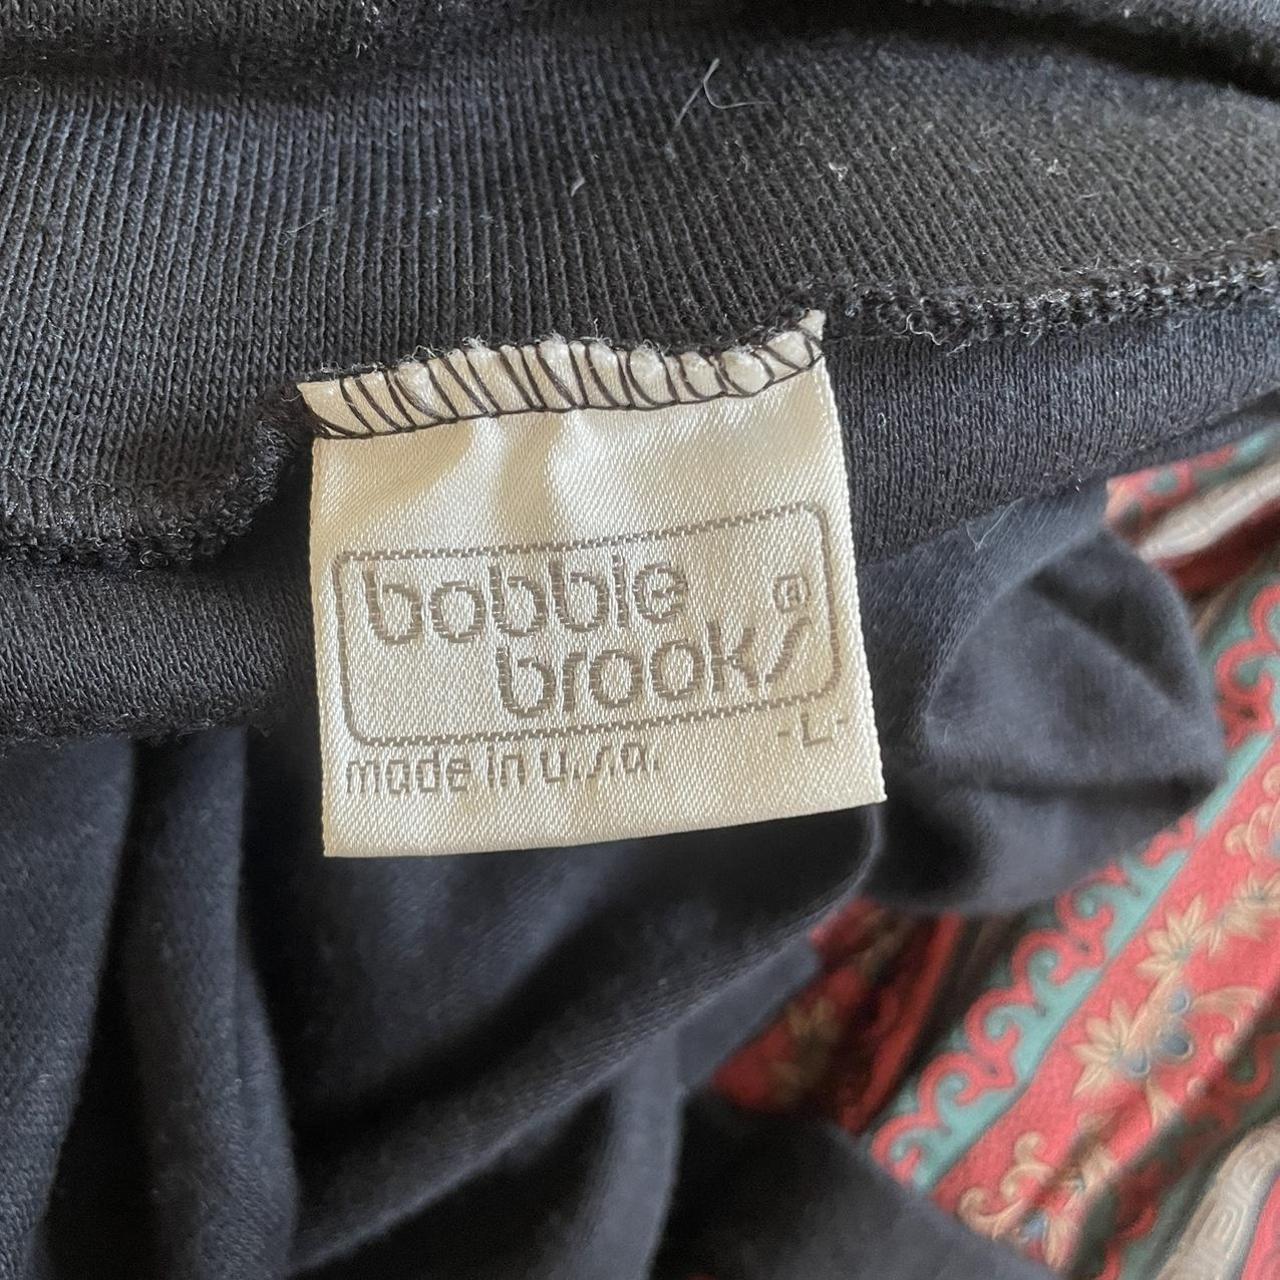 BOBBIE BROOKS | Excellent condition. Bobbie Brooks... - Depop